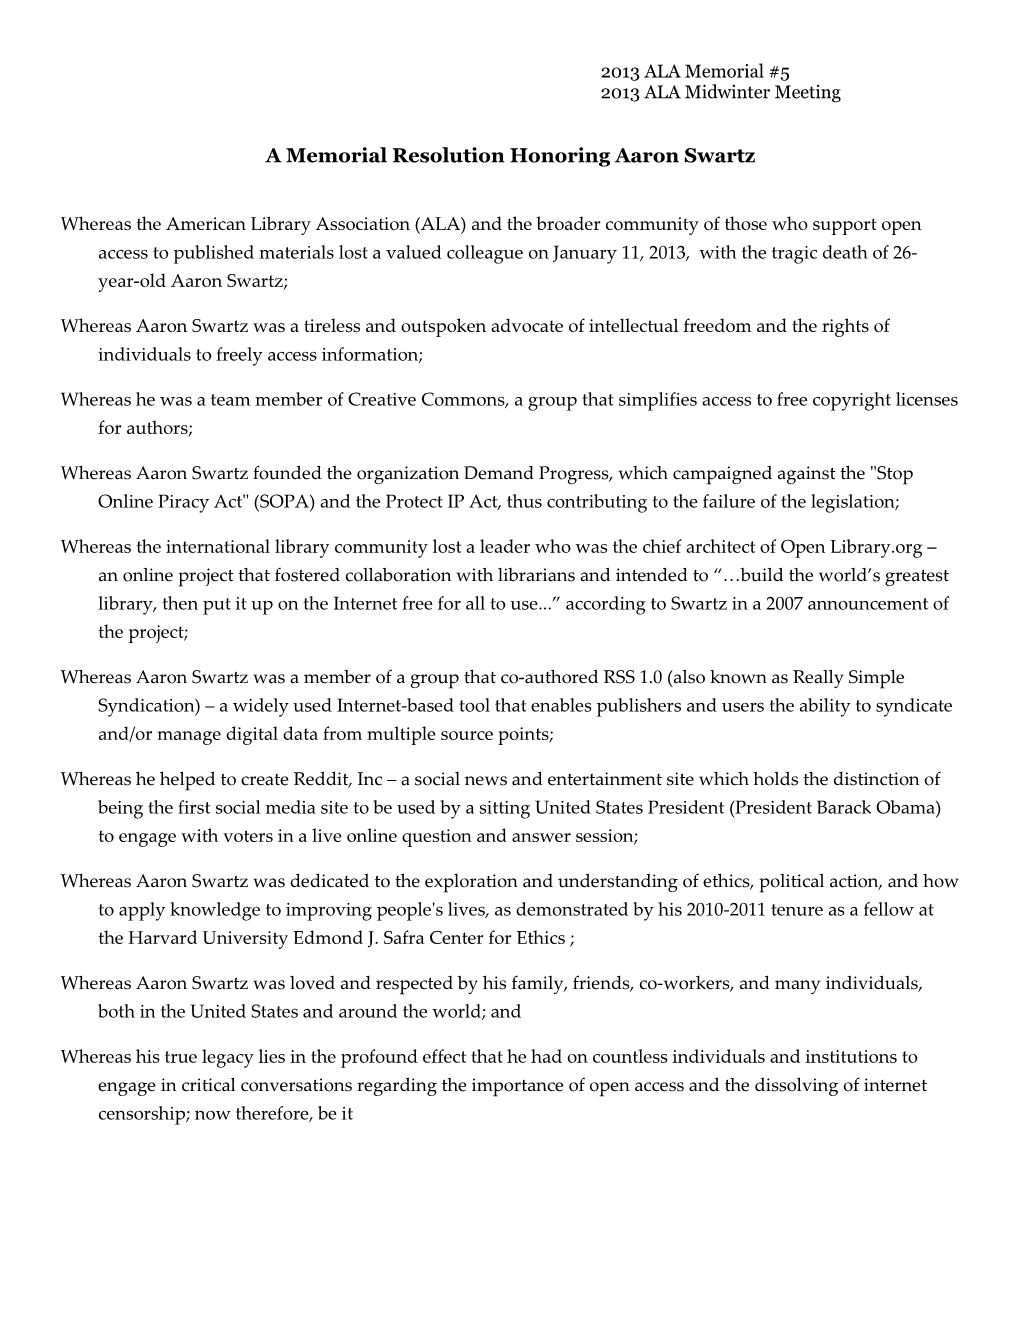 A Memorial Resolution Honoring Aaron Swartz